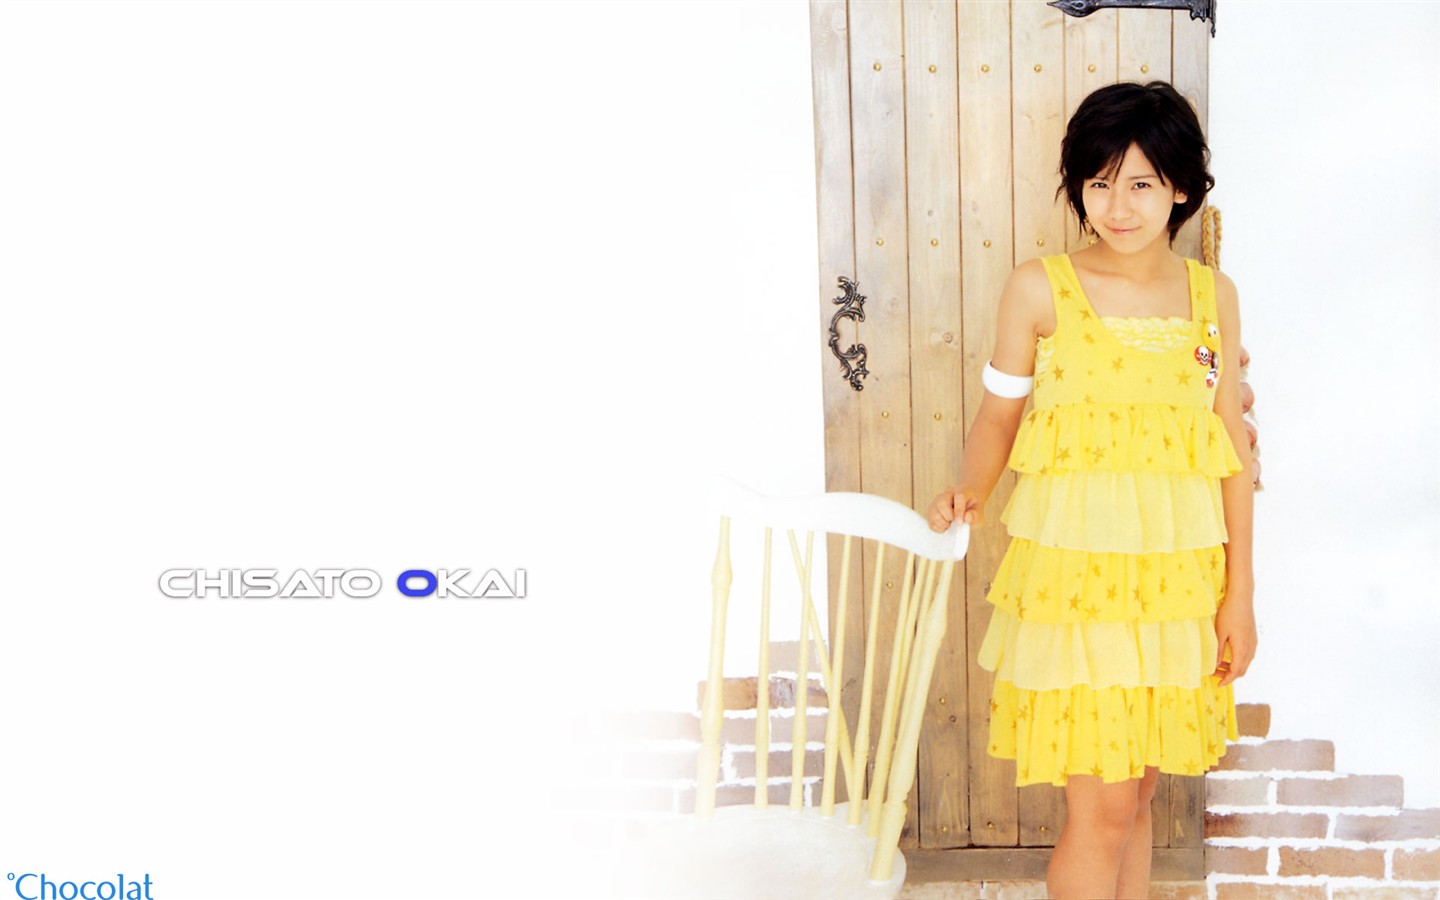 Cute Japanese beauty photo portfolio #6 - 1440x900